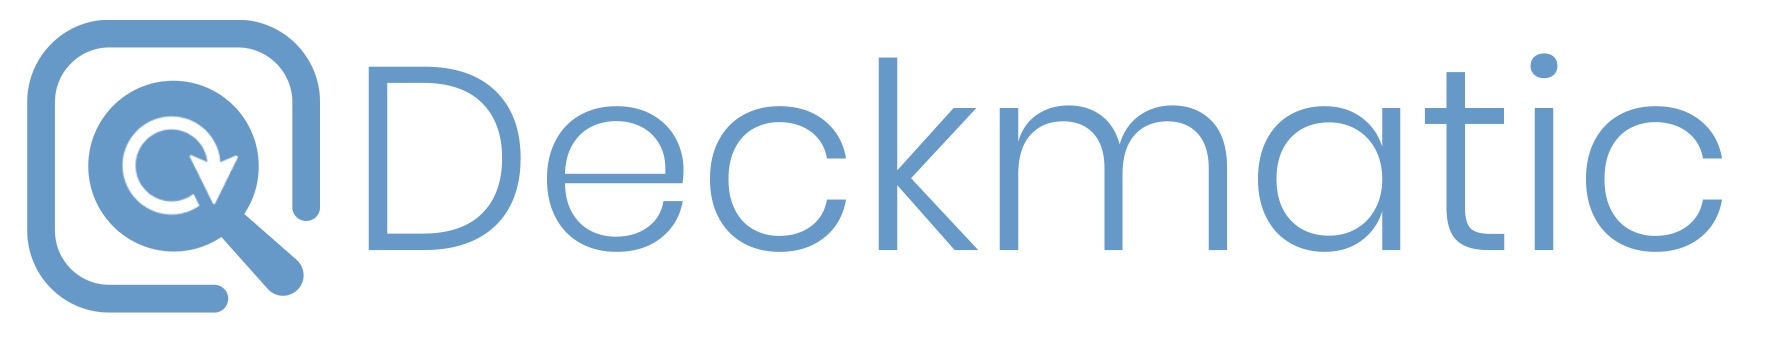 Deckmatic logo